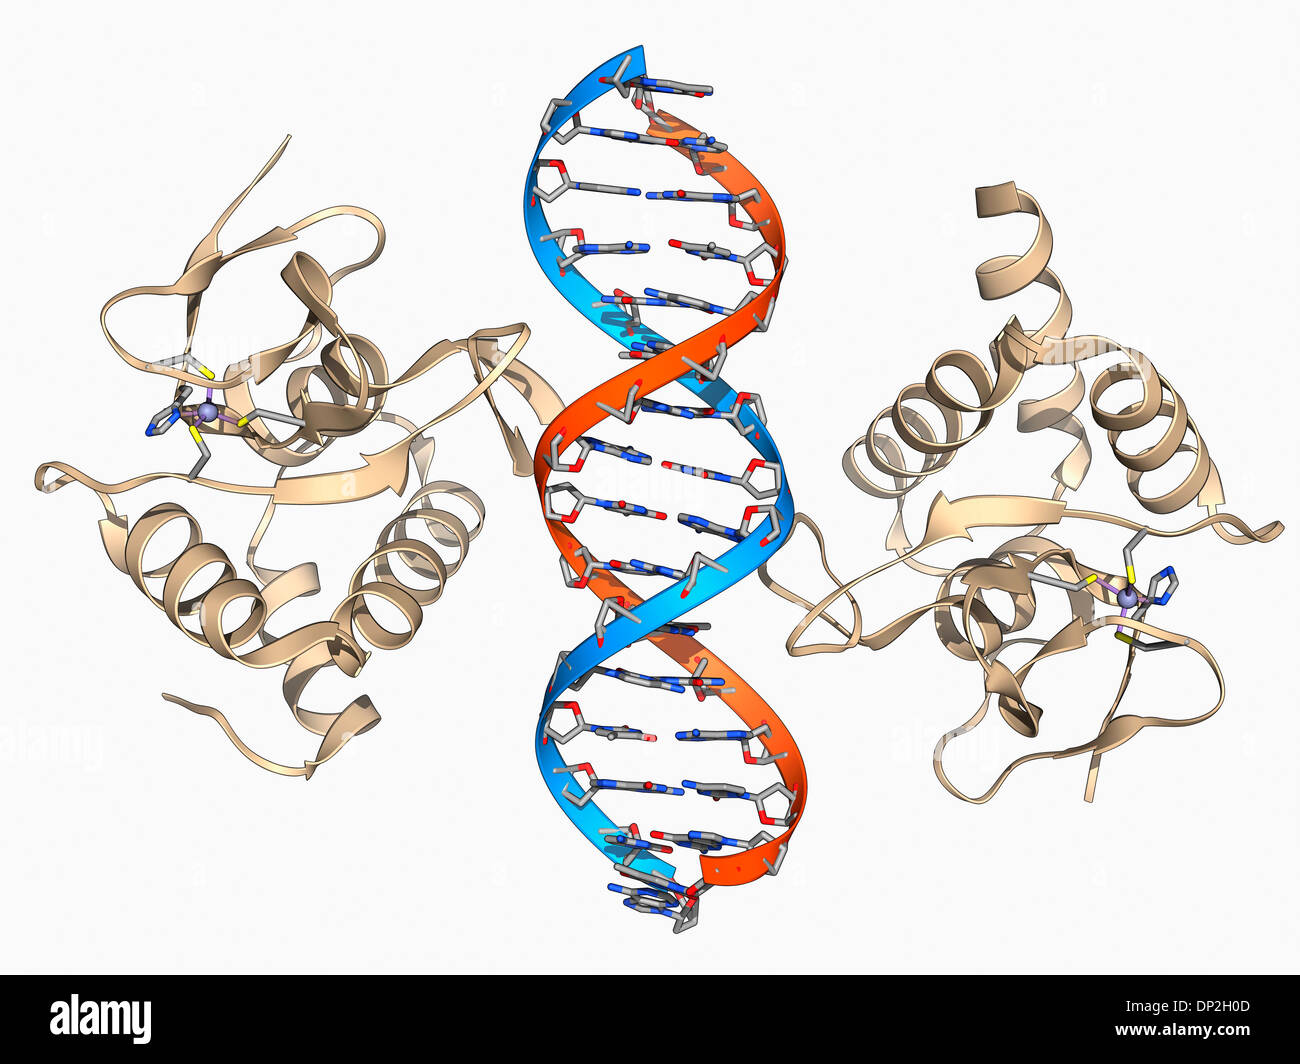 SMAD4 protein domain bound to DNA Stock Photo